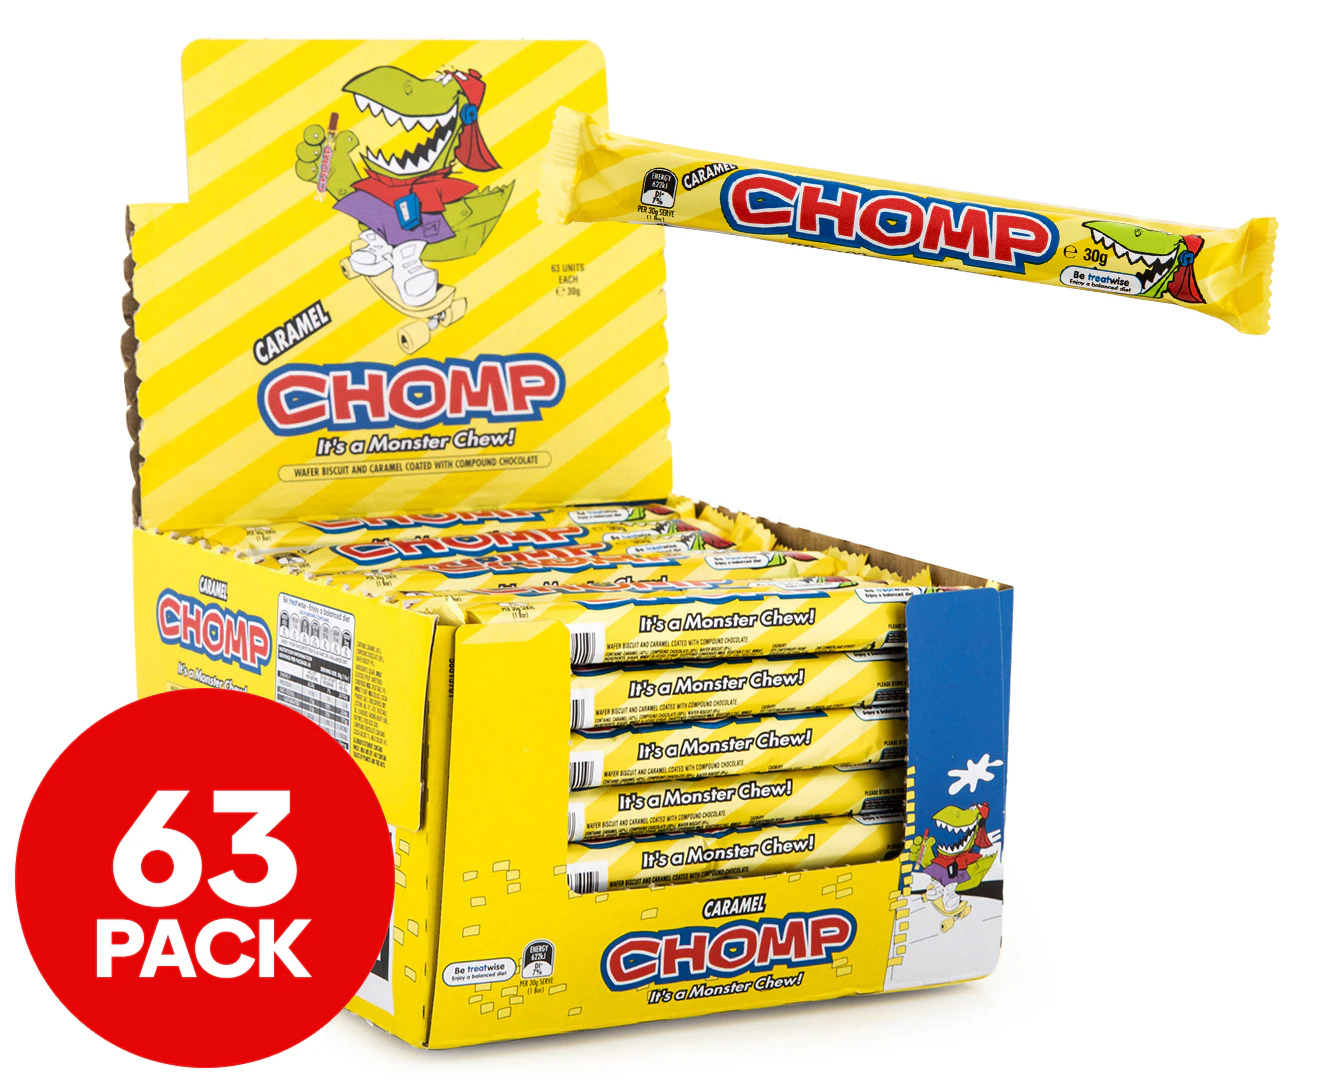 Cadbury Flake Share Pack 168g – Aussie Food Express